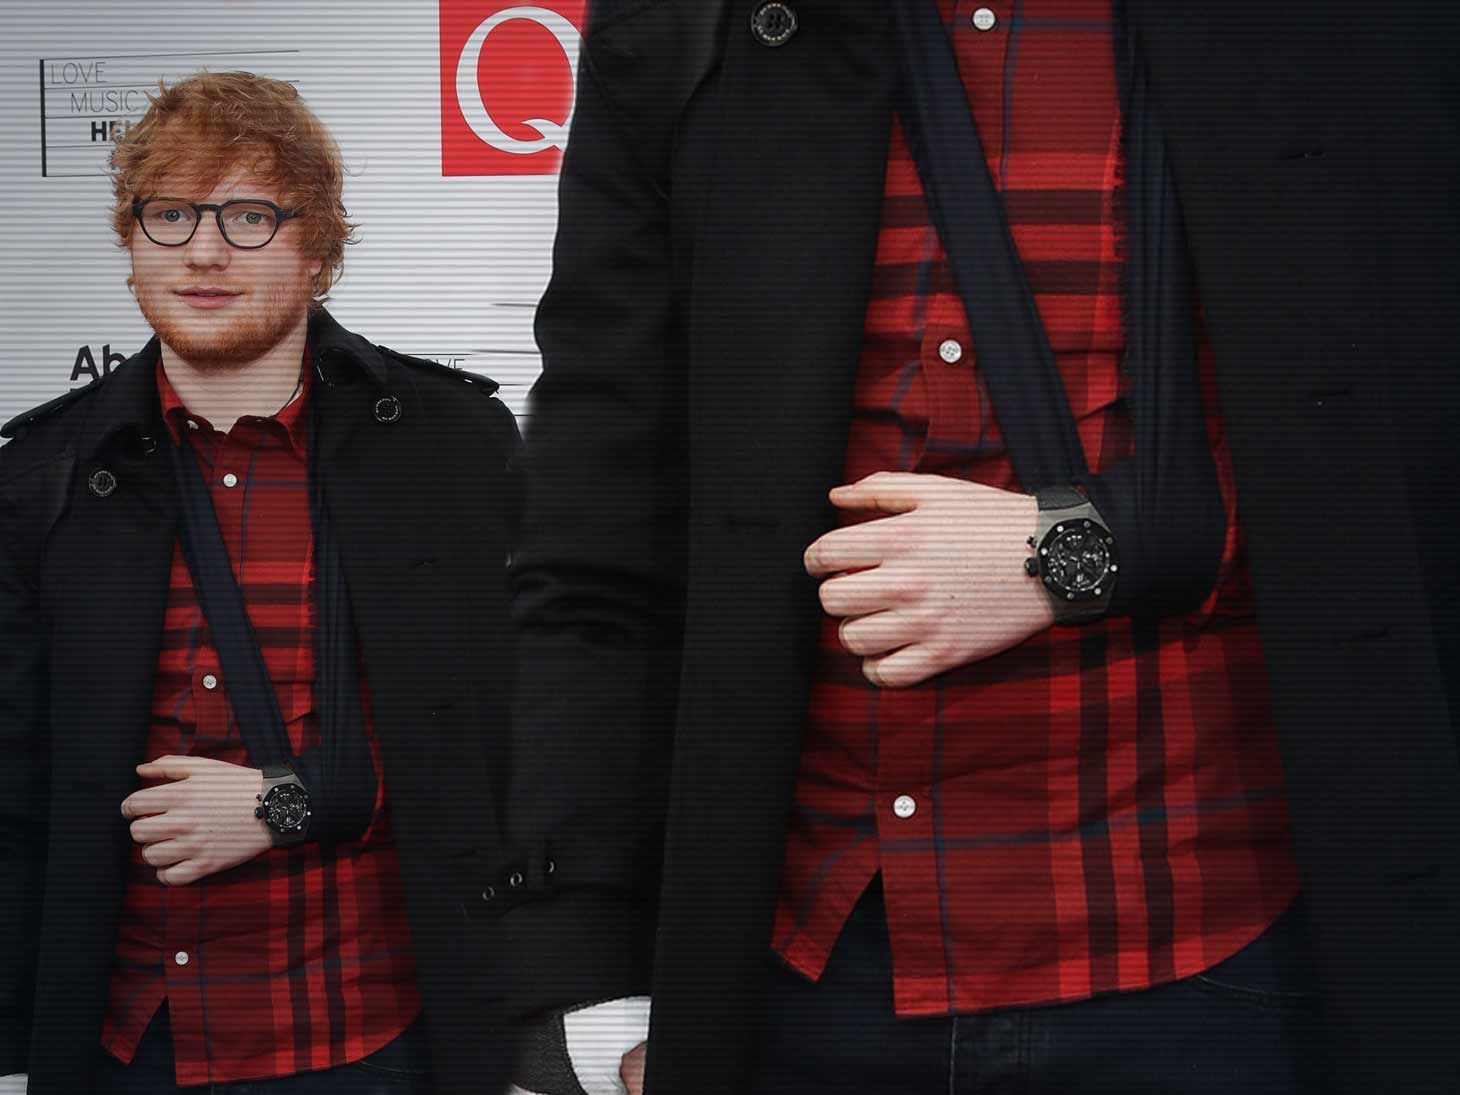 Ed Sheeran’s Broken Arm at the Center of New Lawsuit